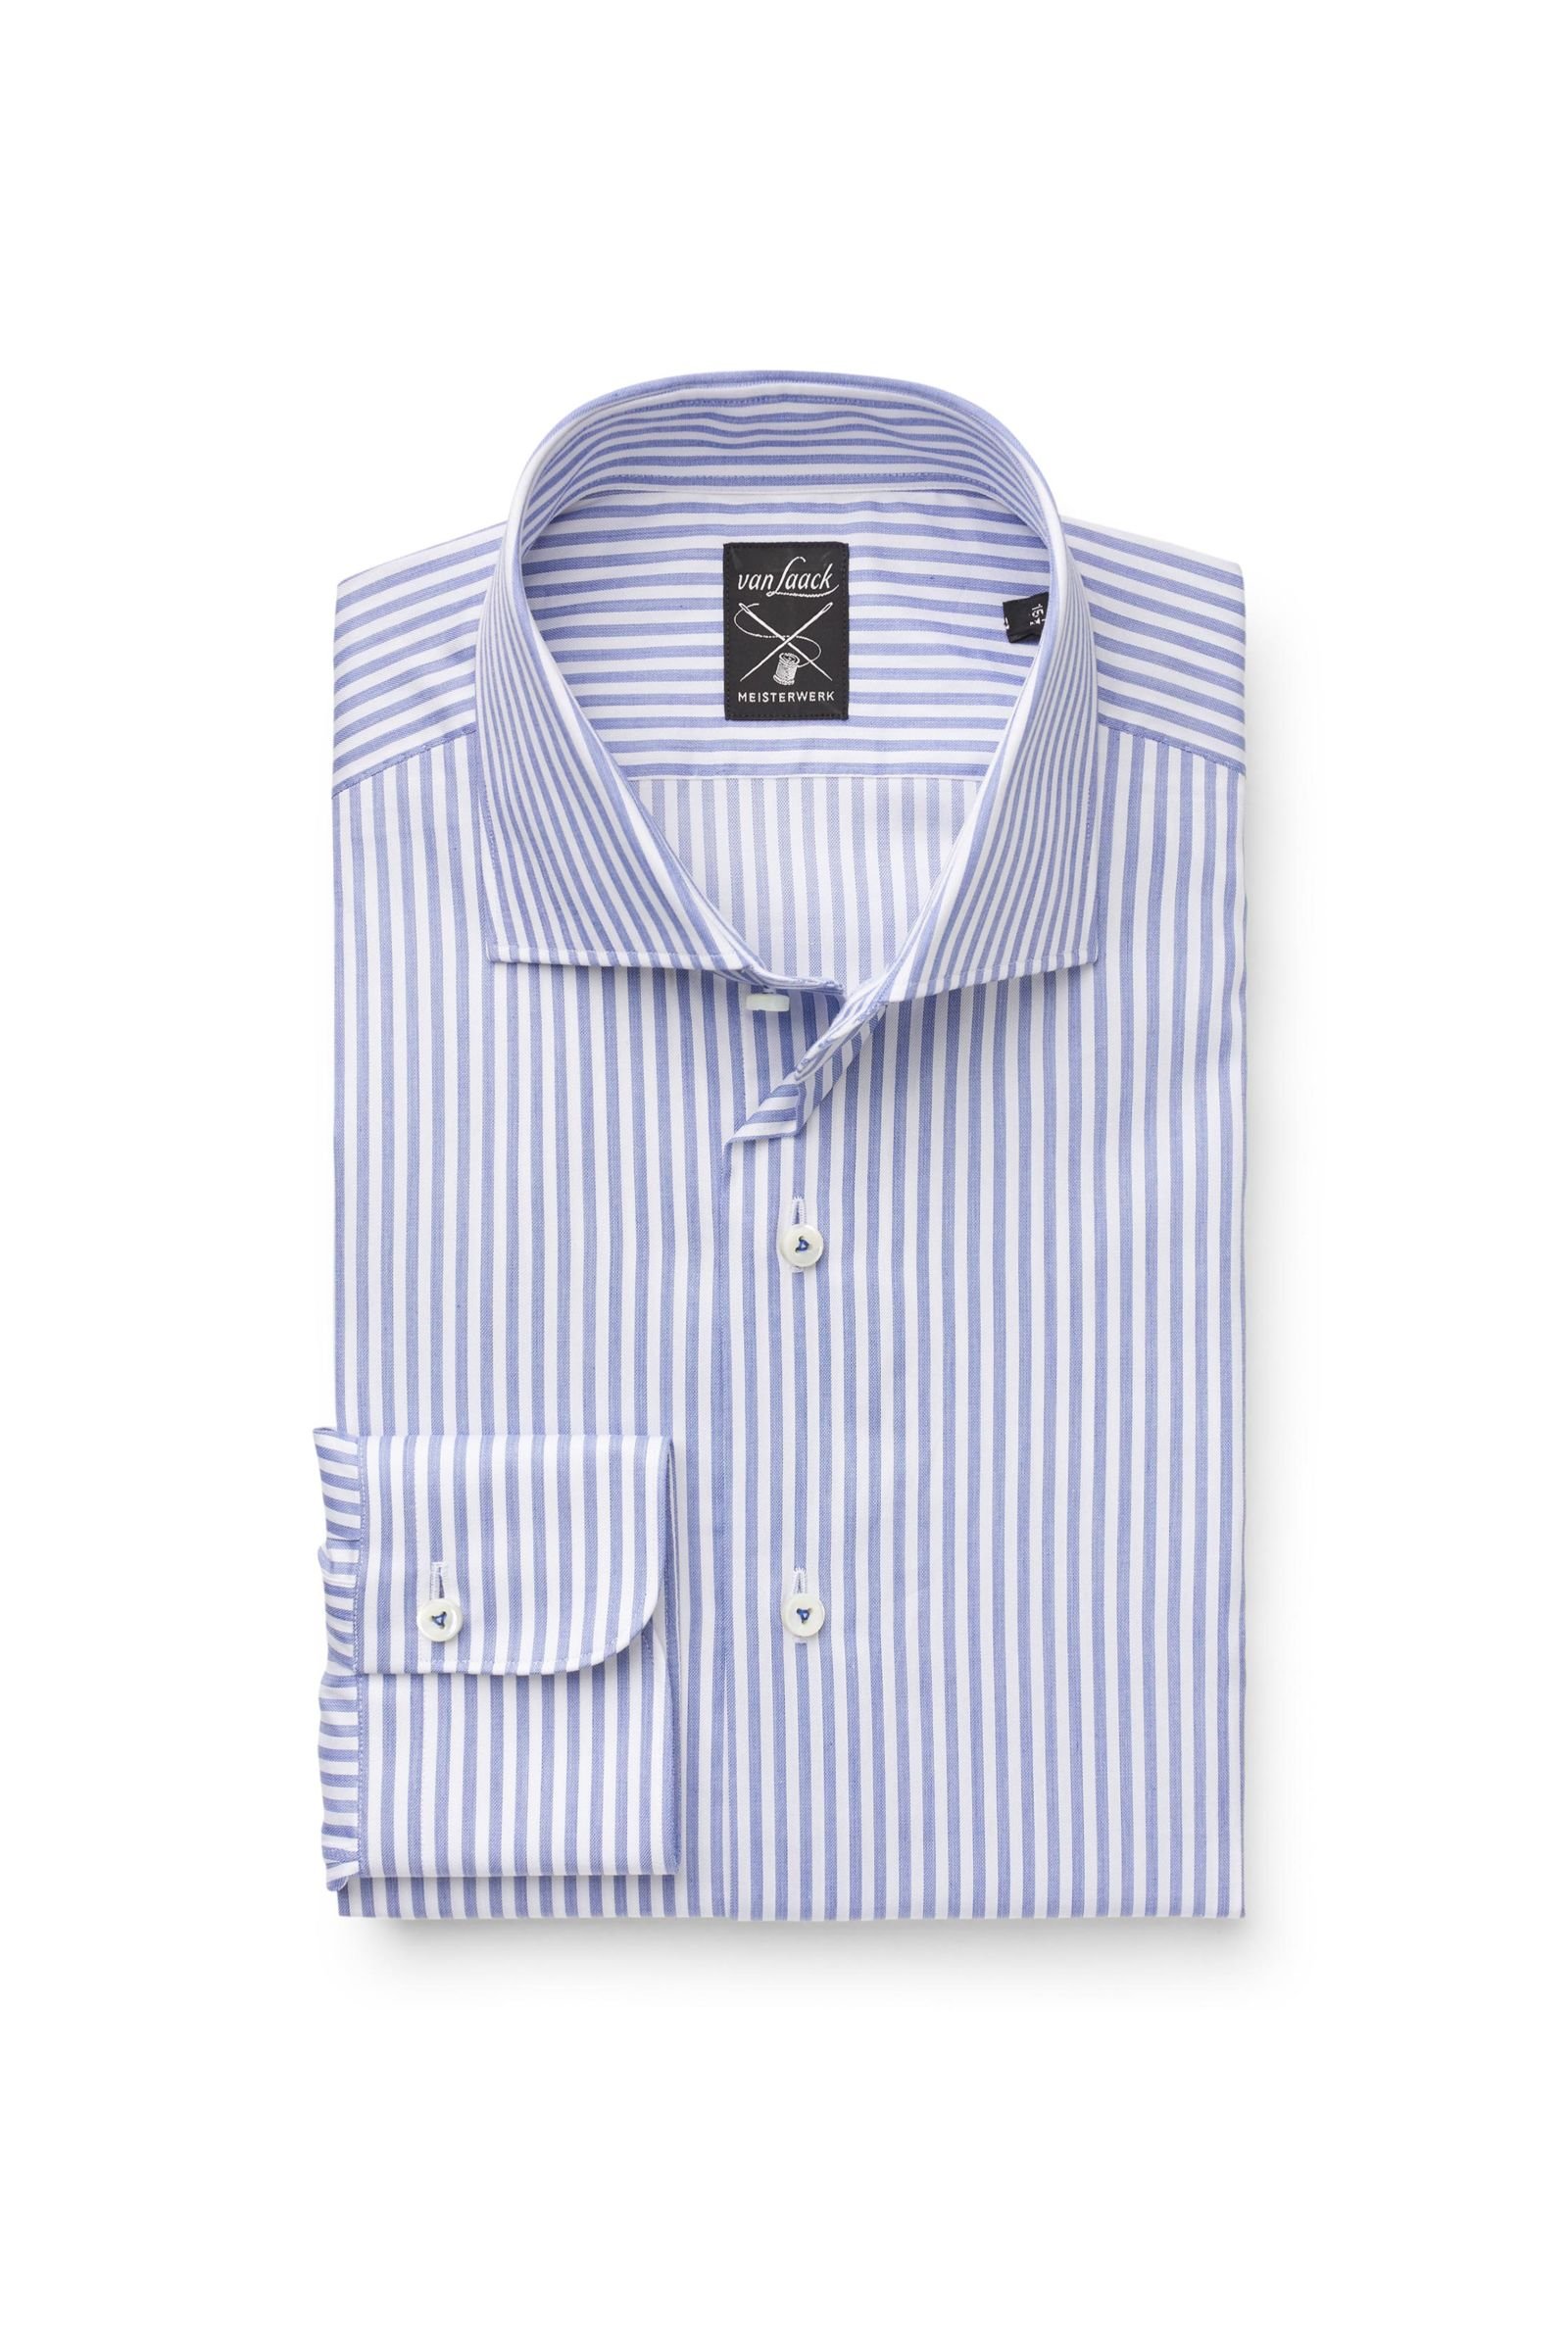 Business shirt 'Mivara Tailor Fit' shark collar grey-blue/white striped